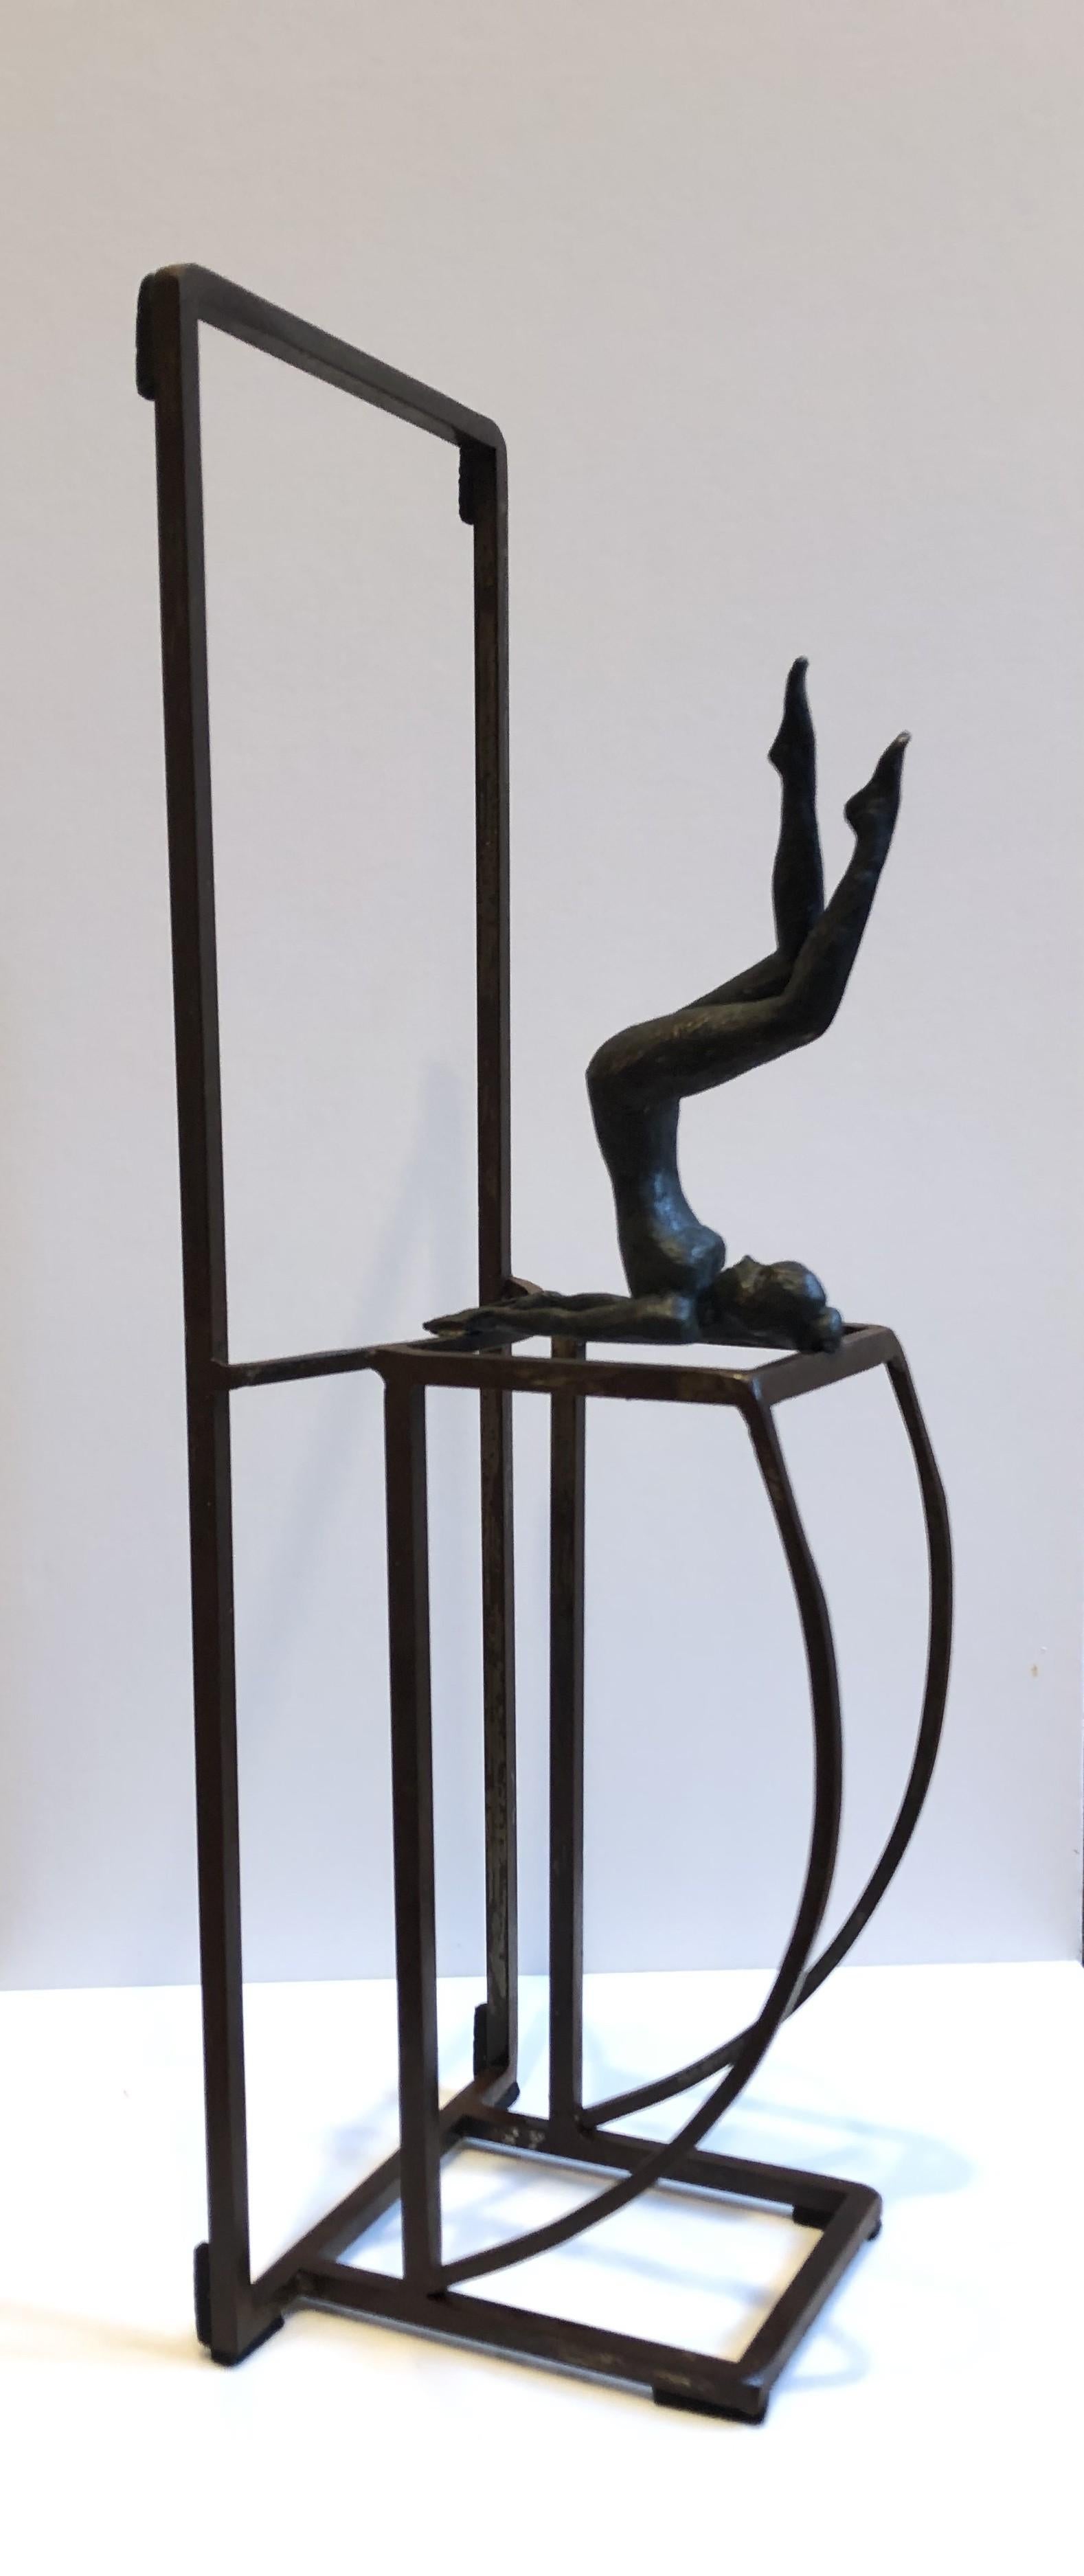 Joan Artigas Planas Figurative Sculpture - "Yoga" contemporary bronze table, mural sculpture figurative girl relax yoga